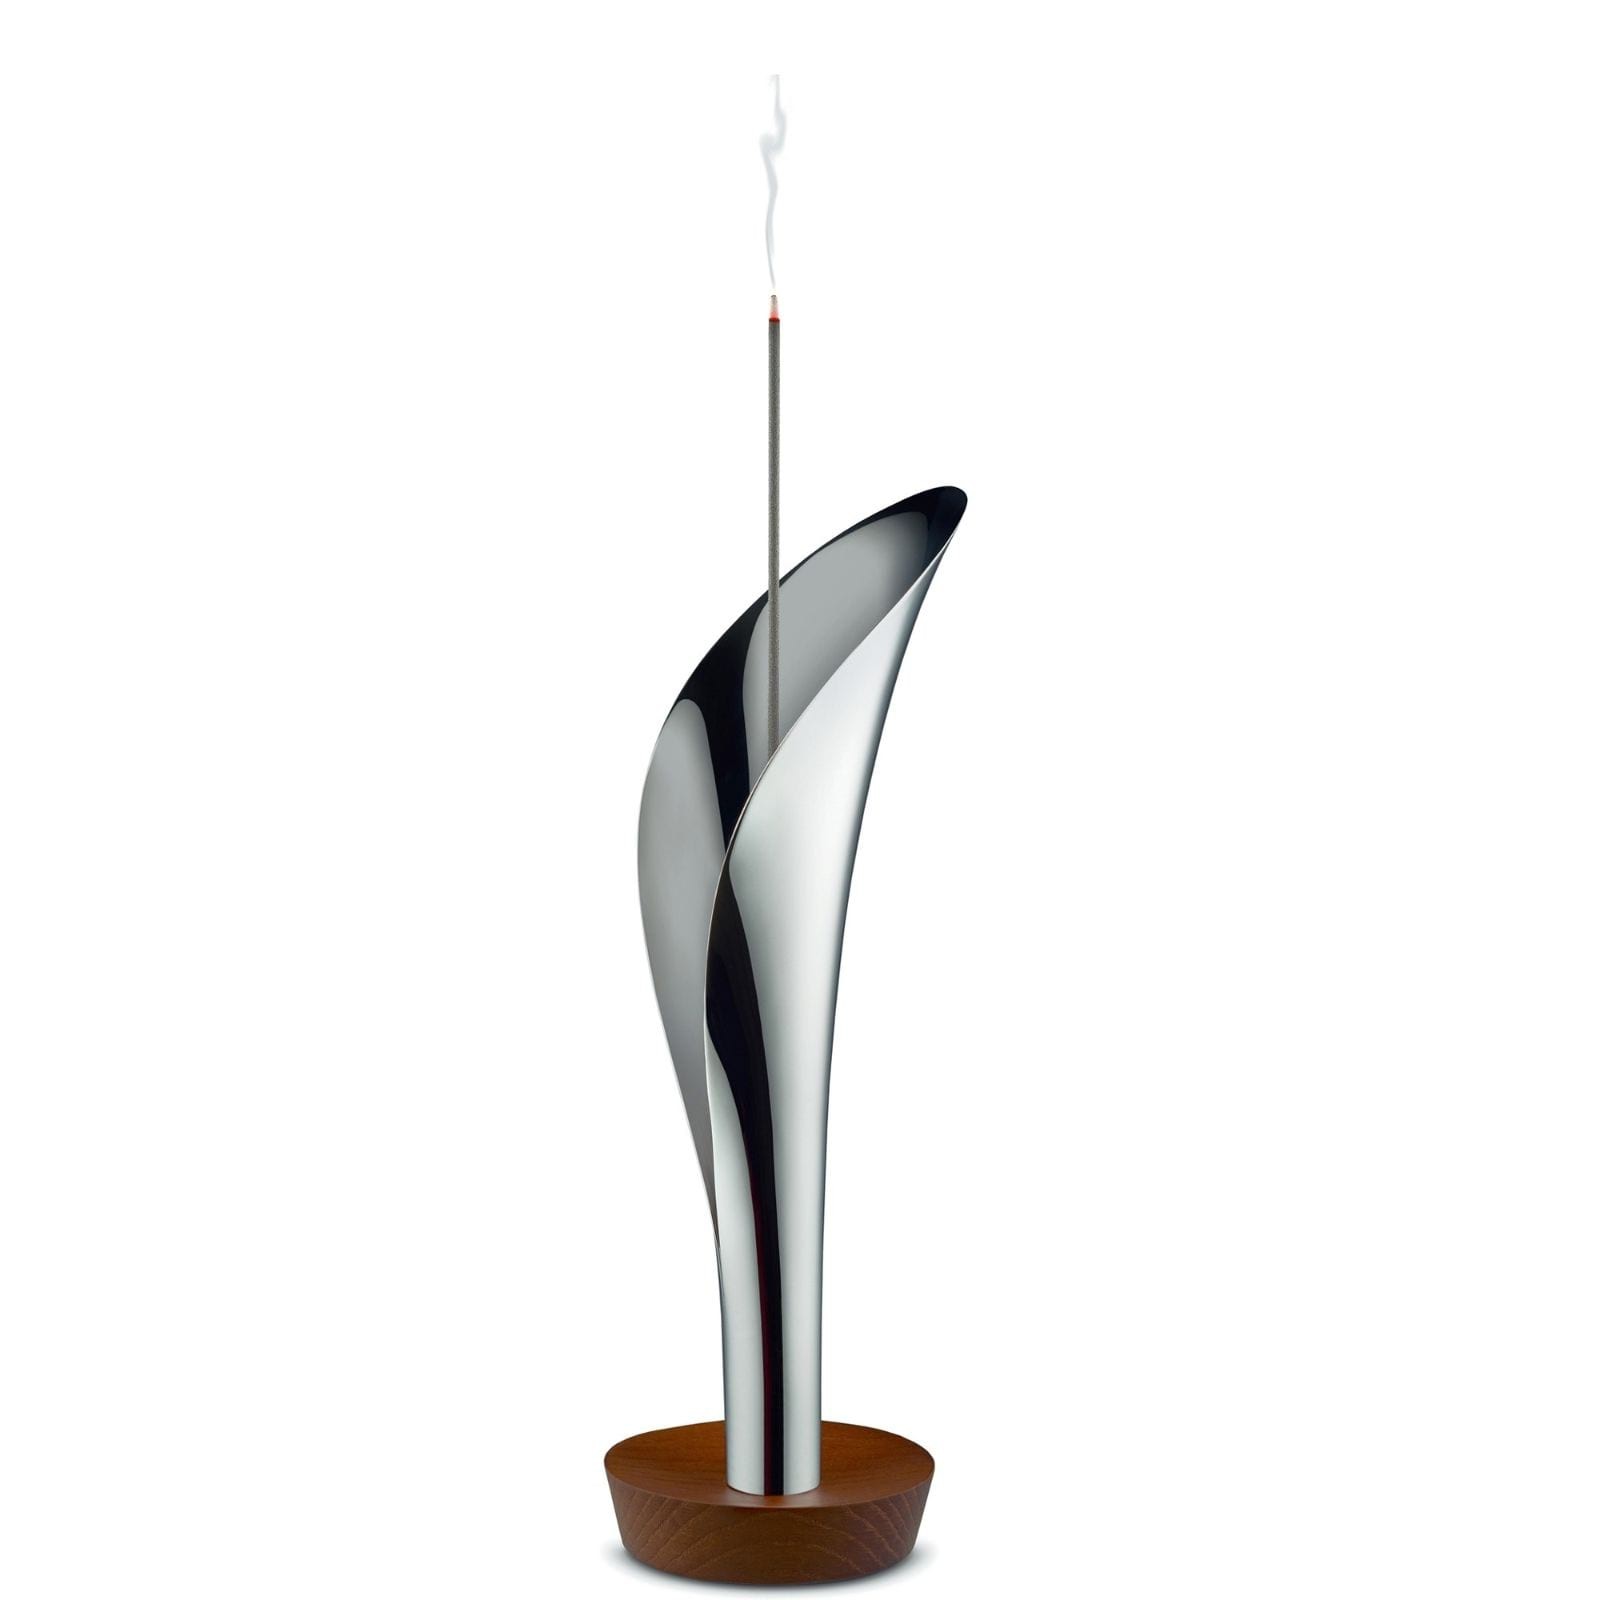 Lily Incense Burner (Steel / Wood) - Alessi